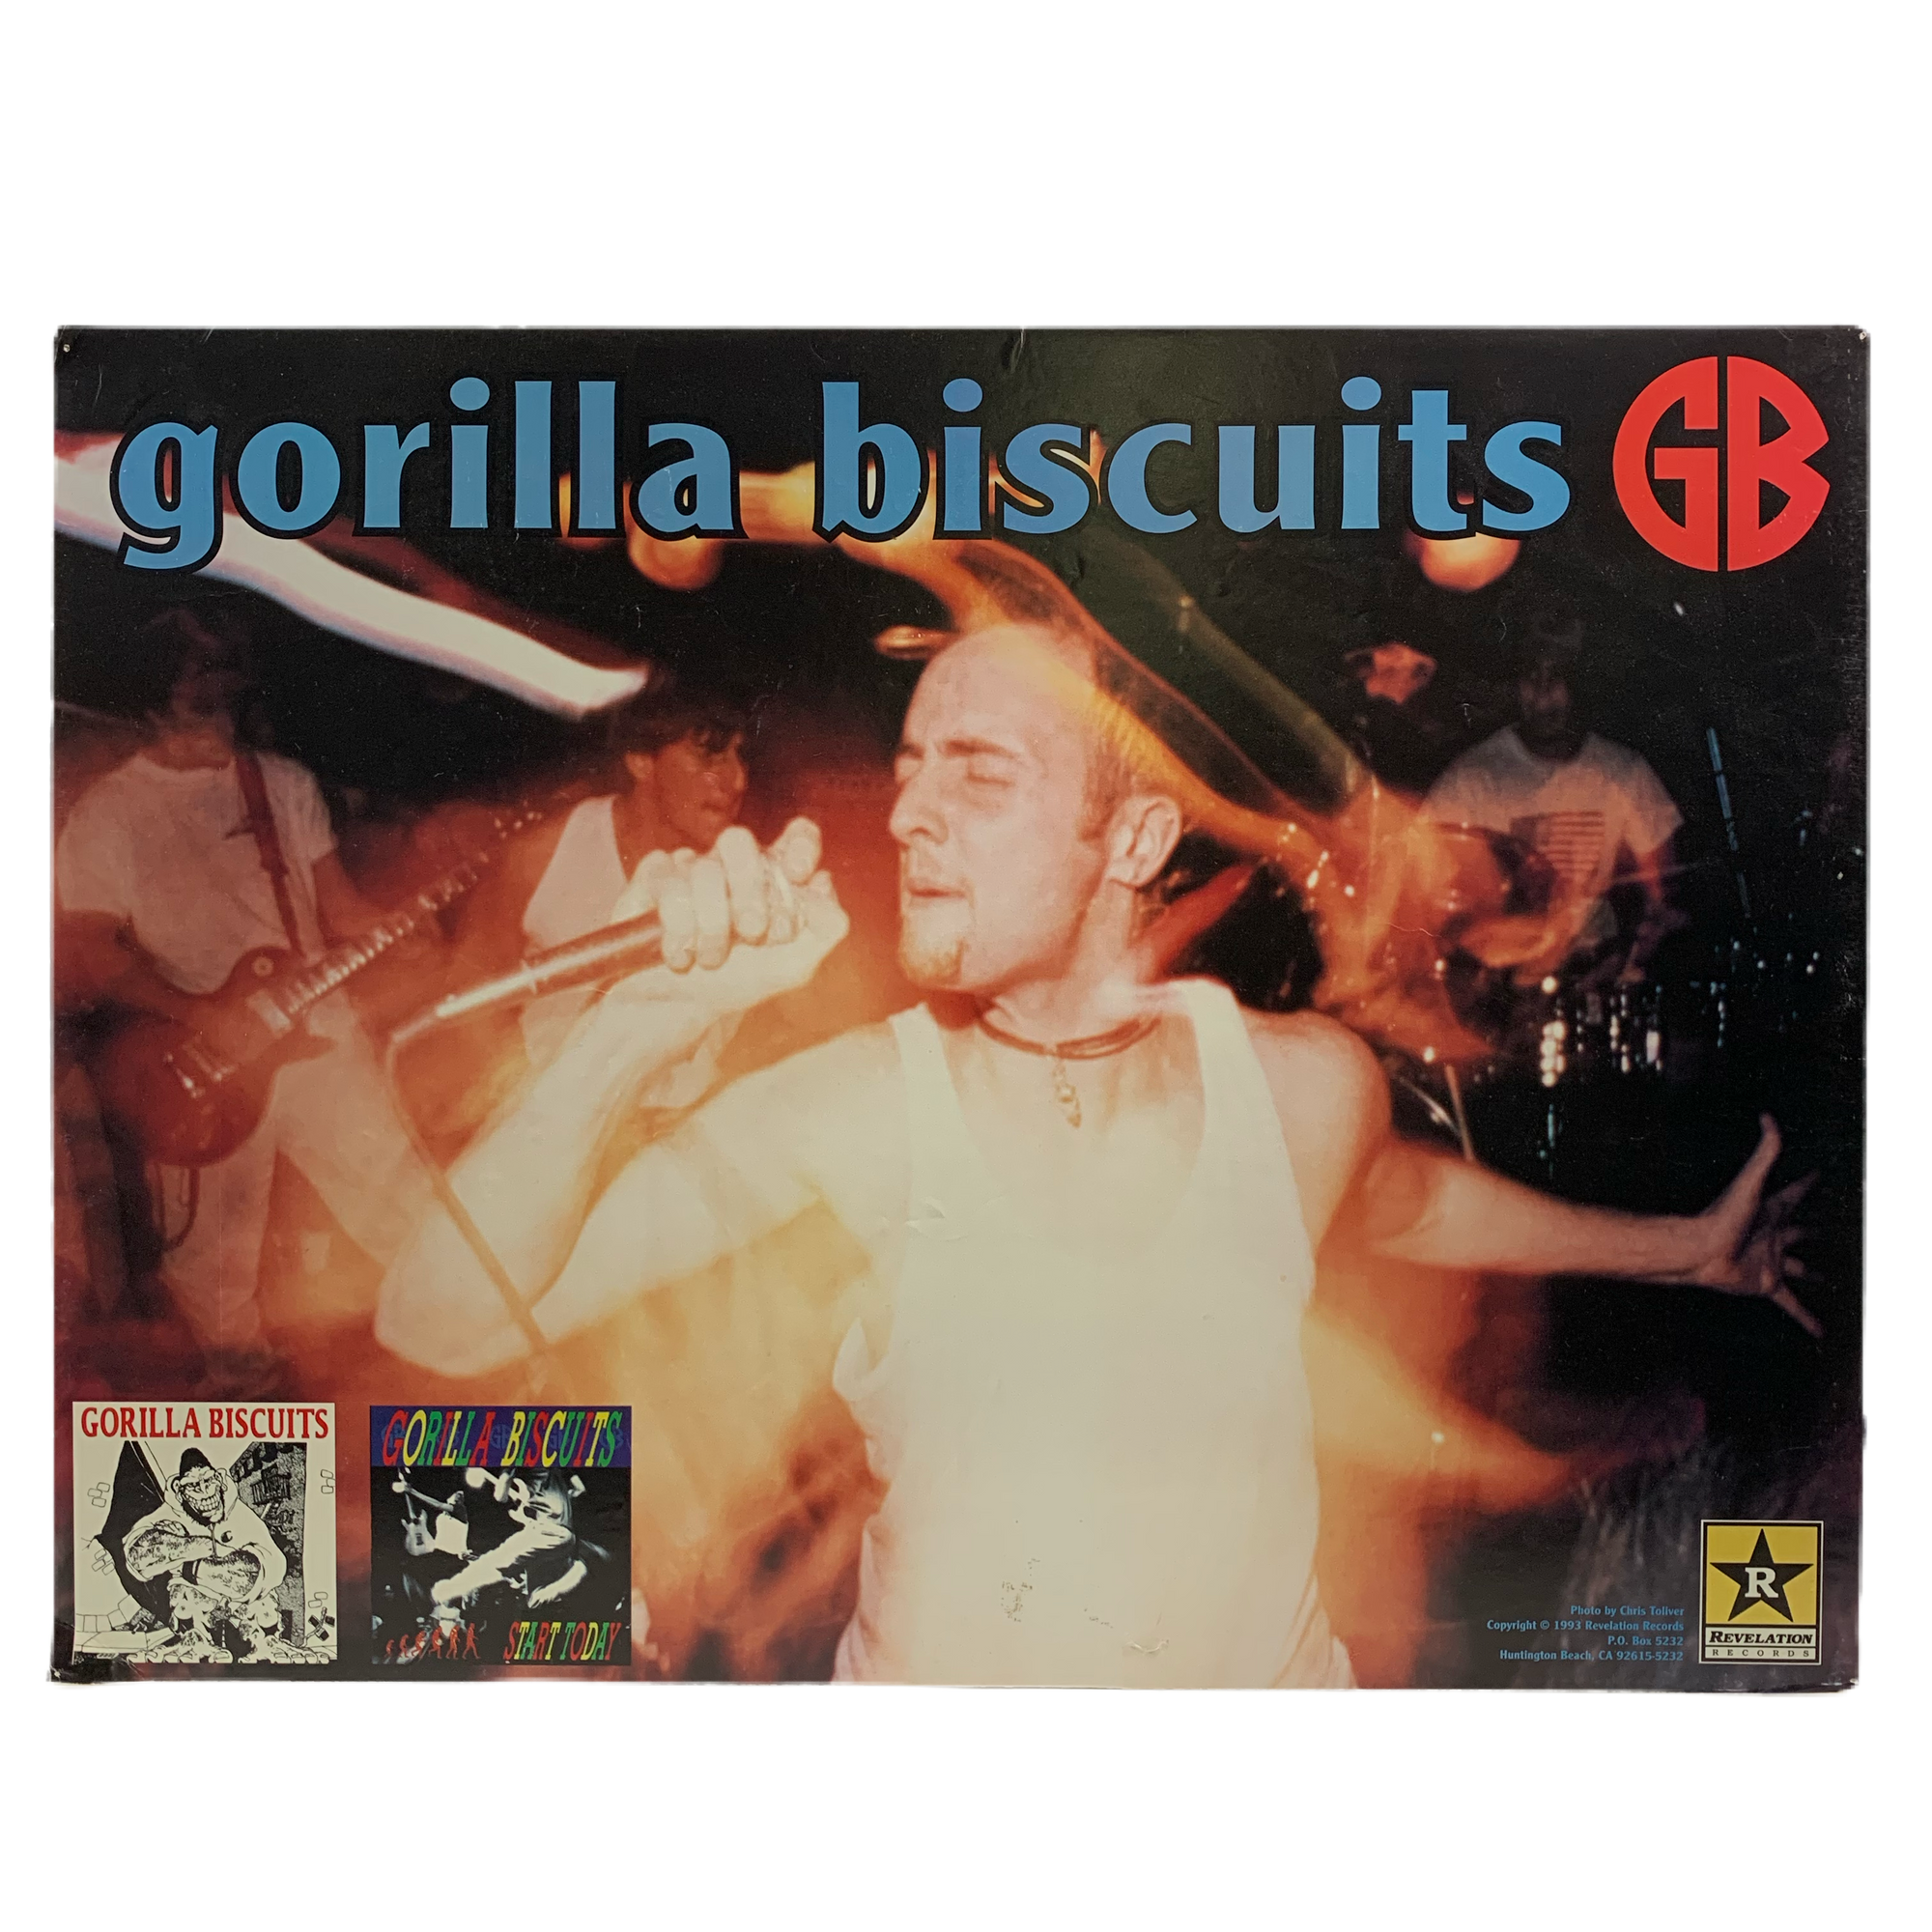 Vintage Gorilla Biscuits “Revelation Récords” Promotional Foam Core Poster - jointcustodydc